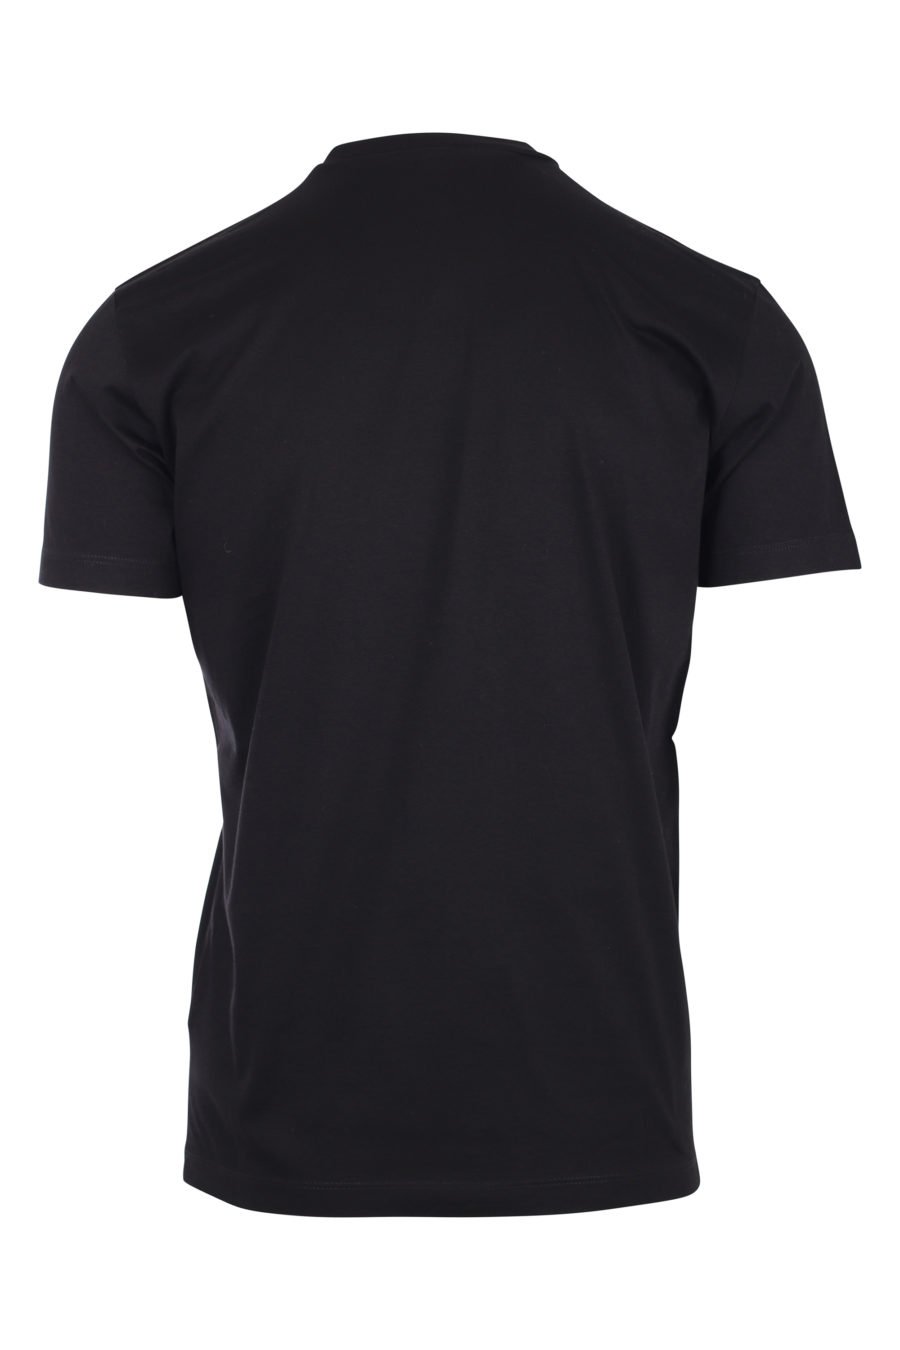 T-shirt noir avec logo "icon" - IMG 9790